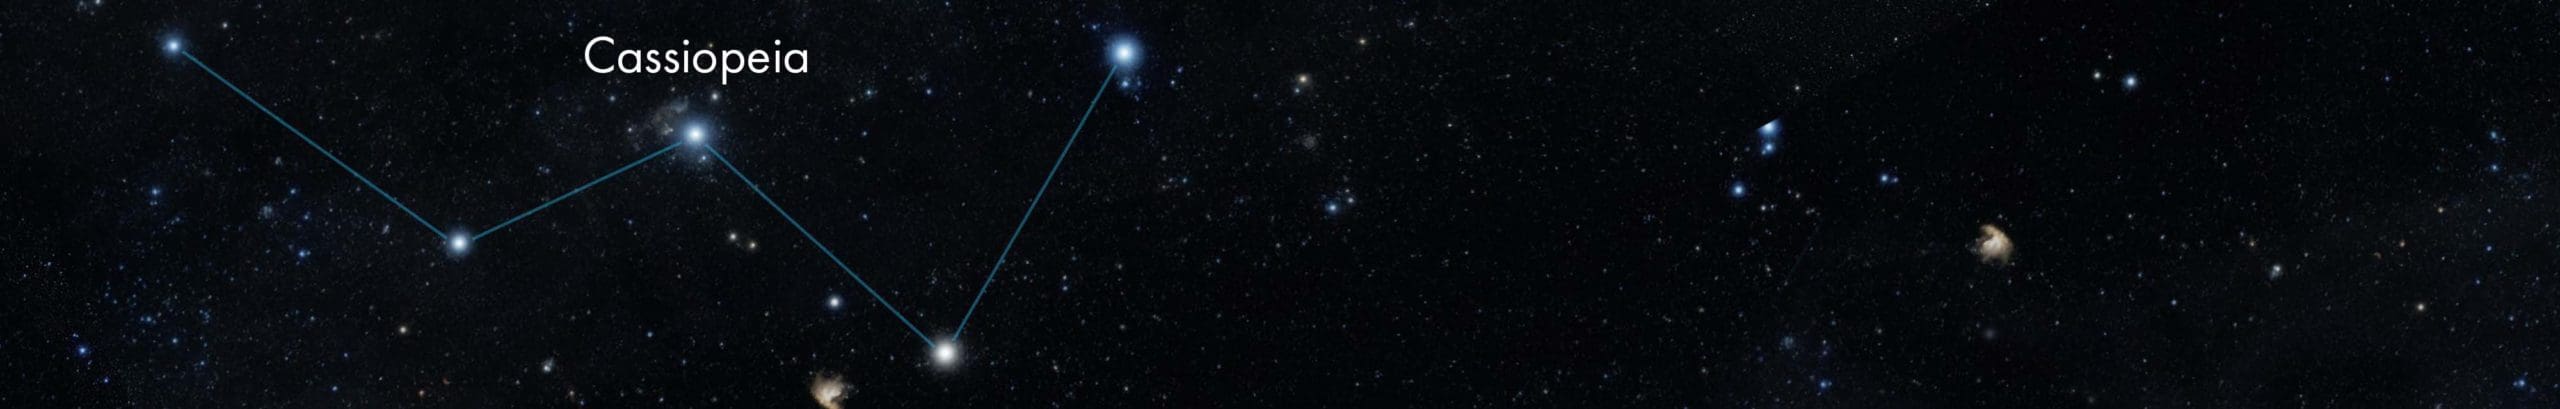 Cassiopeia Constellation Header Scaled